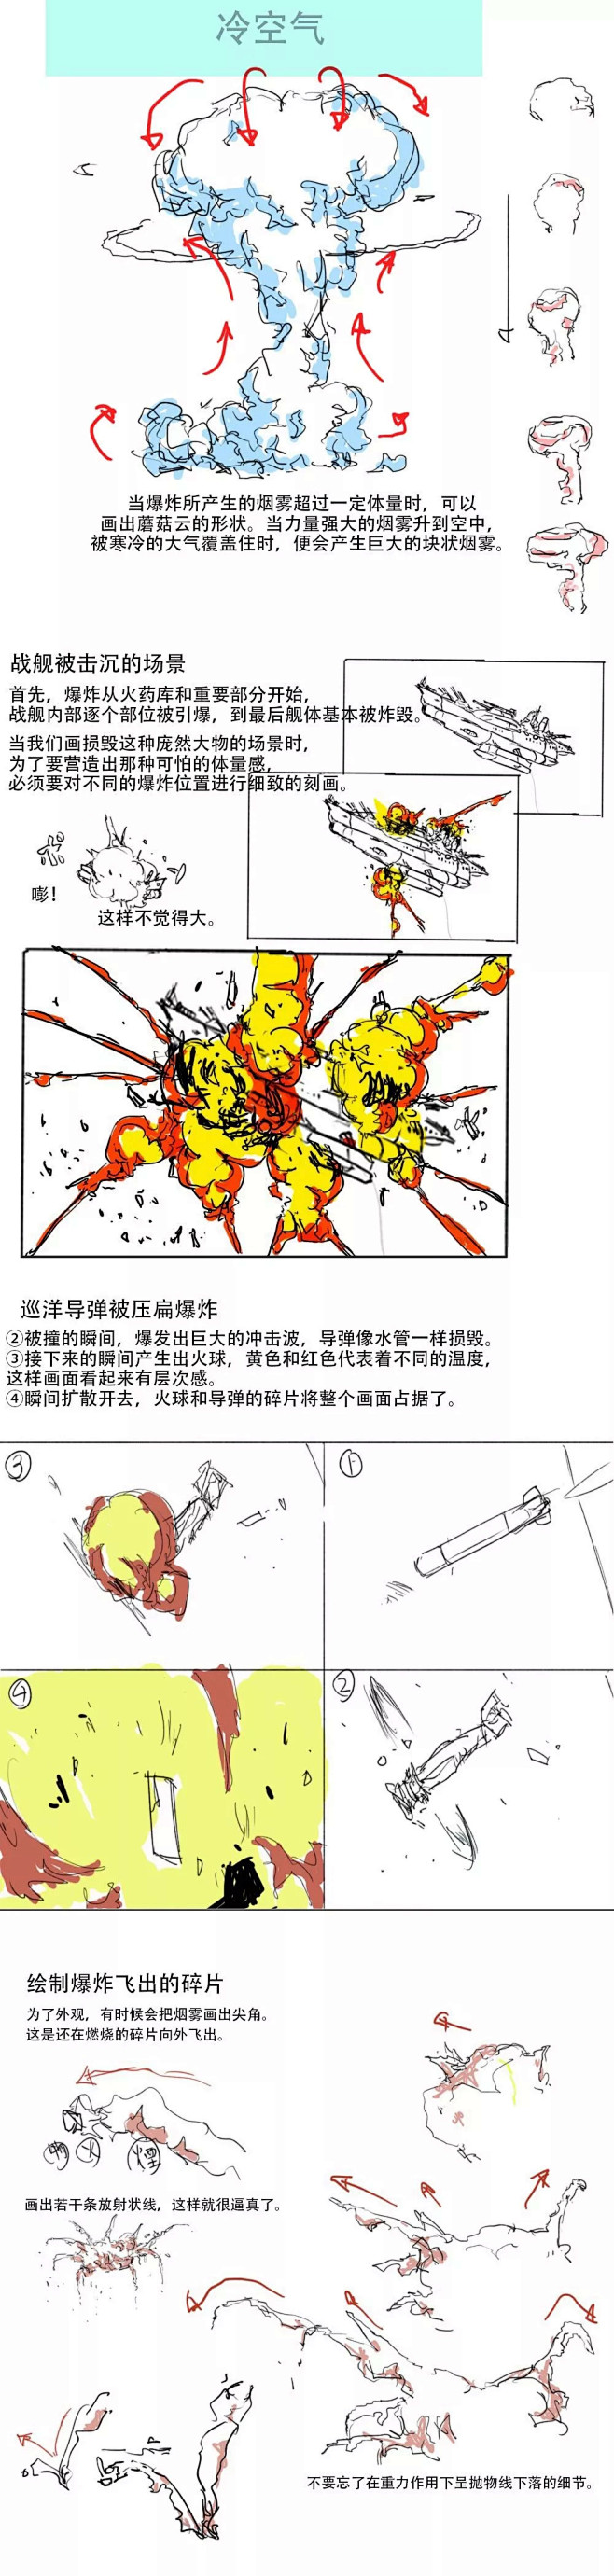 com 【绘画教程】如何绘制蘑菇云等爆破场景的爆炸瞬间画面?